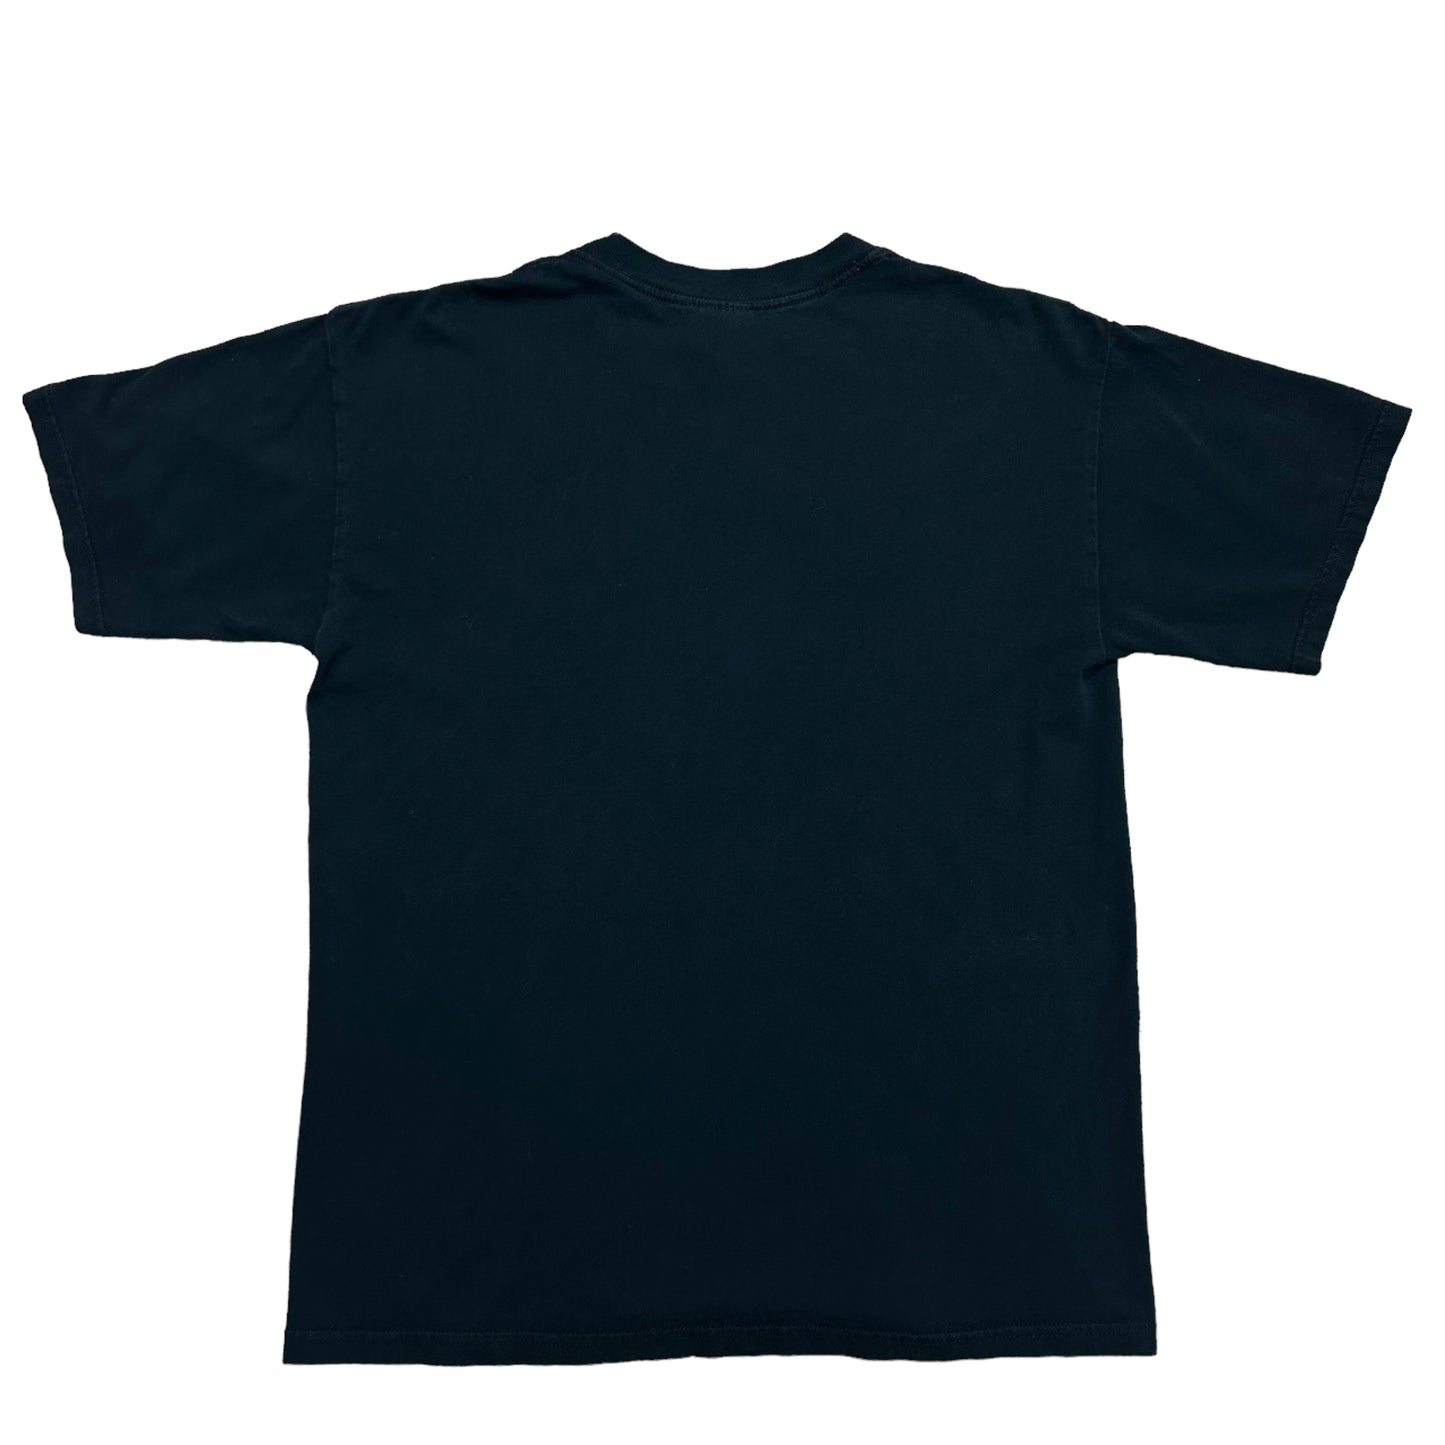 Vintage Y2K Eddie Money “No Control” Black Graphic T-Shirt - Size Medium